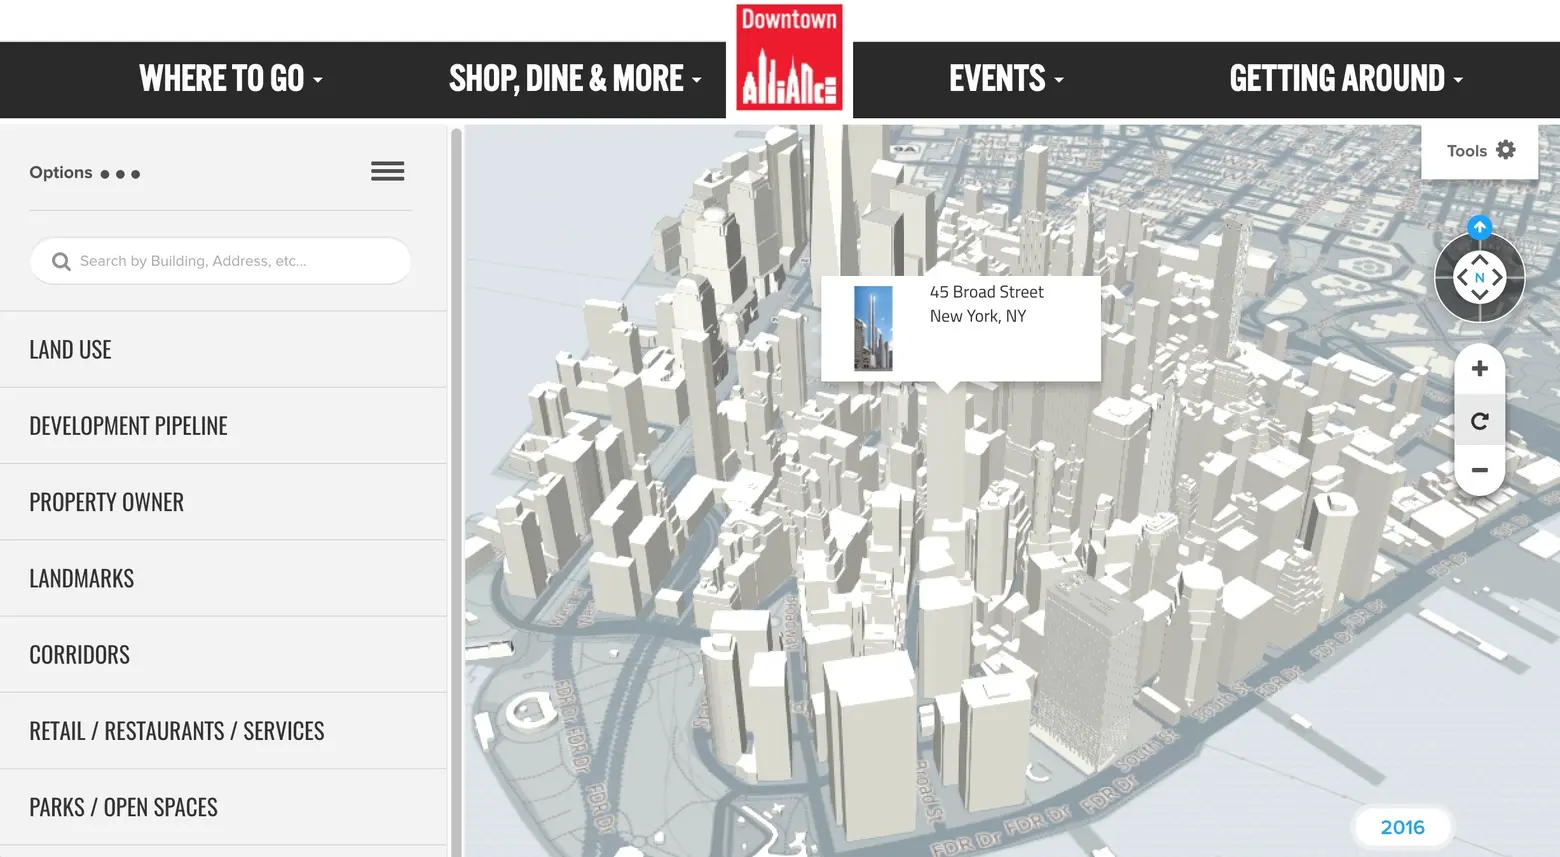 Interactive 3D map of Lower Manhattan updates new developments daily